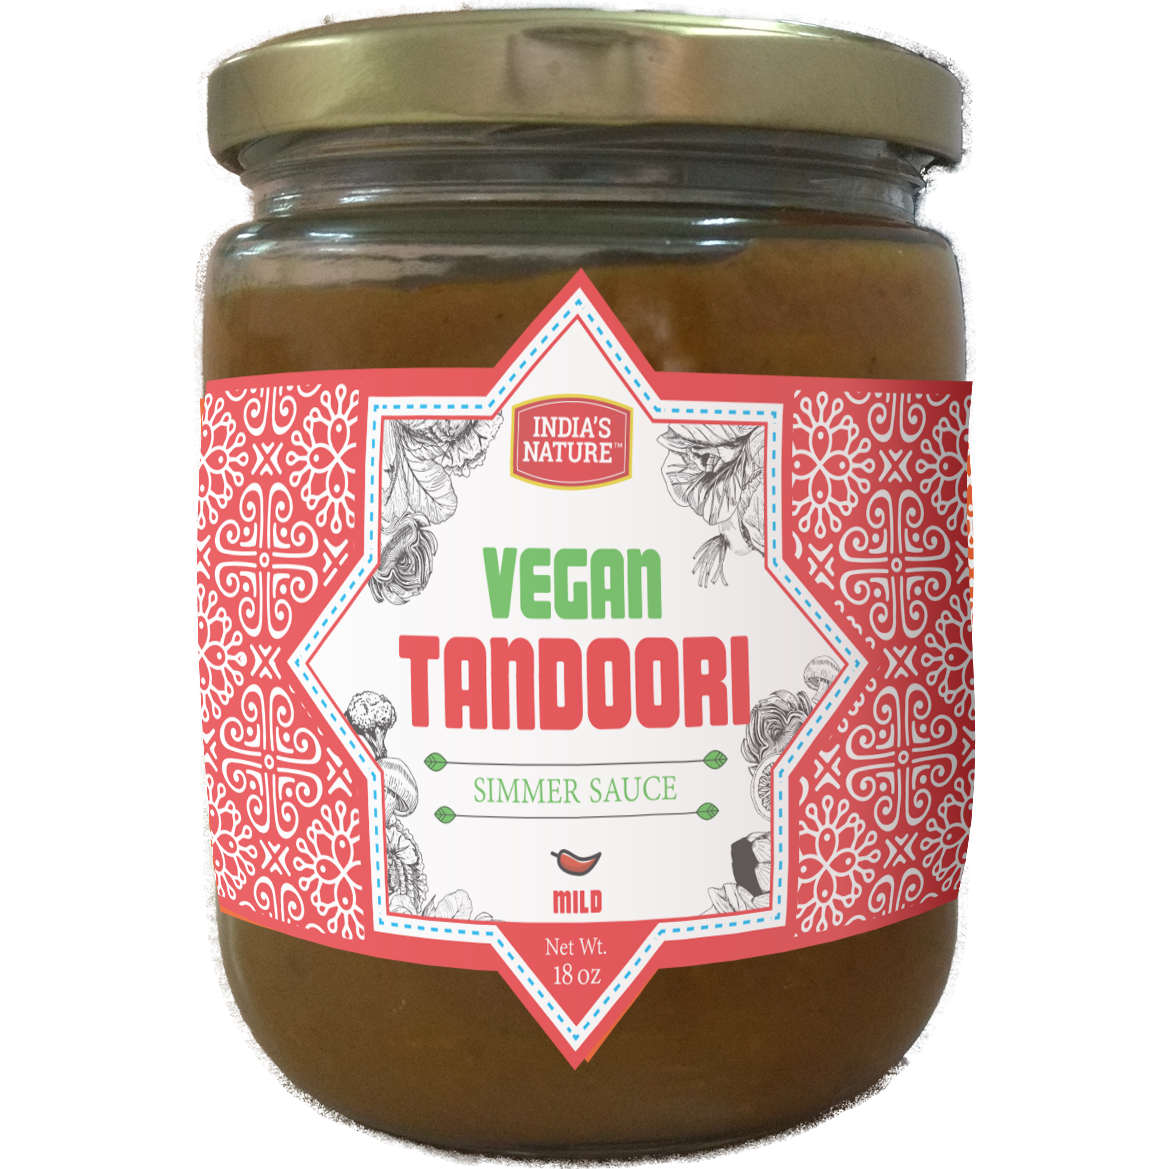 Pack of 5 - India's Nature Vegan Tandoori Simmer Sauce - 18 Oz (510 Gm)